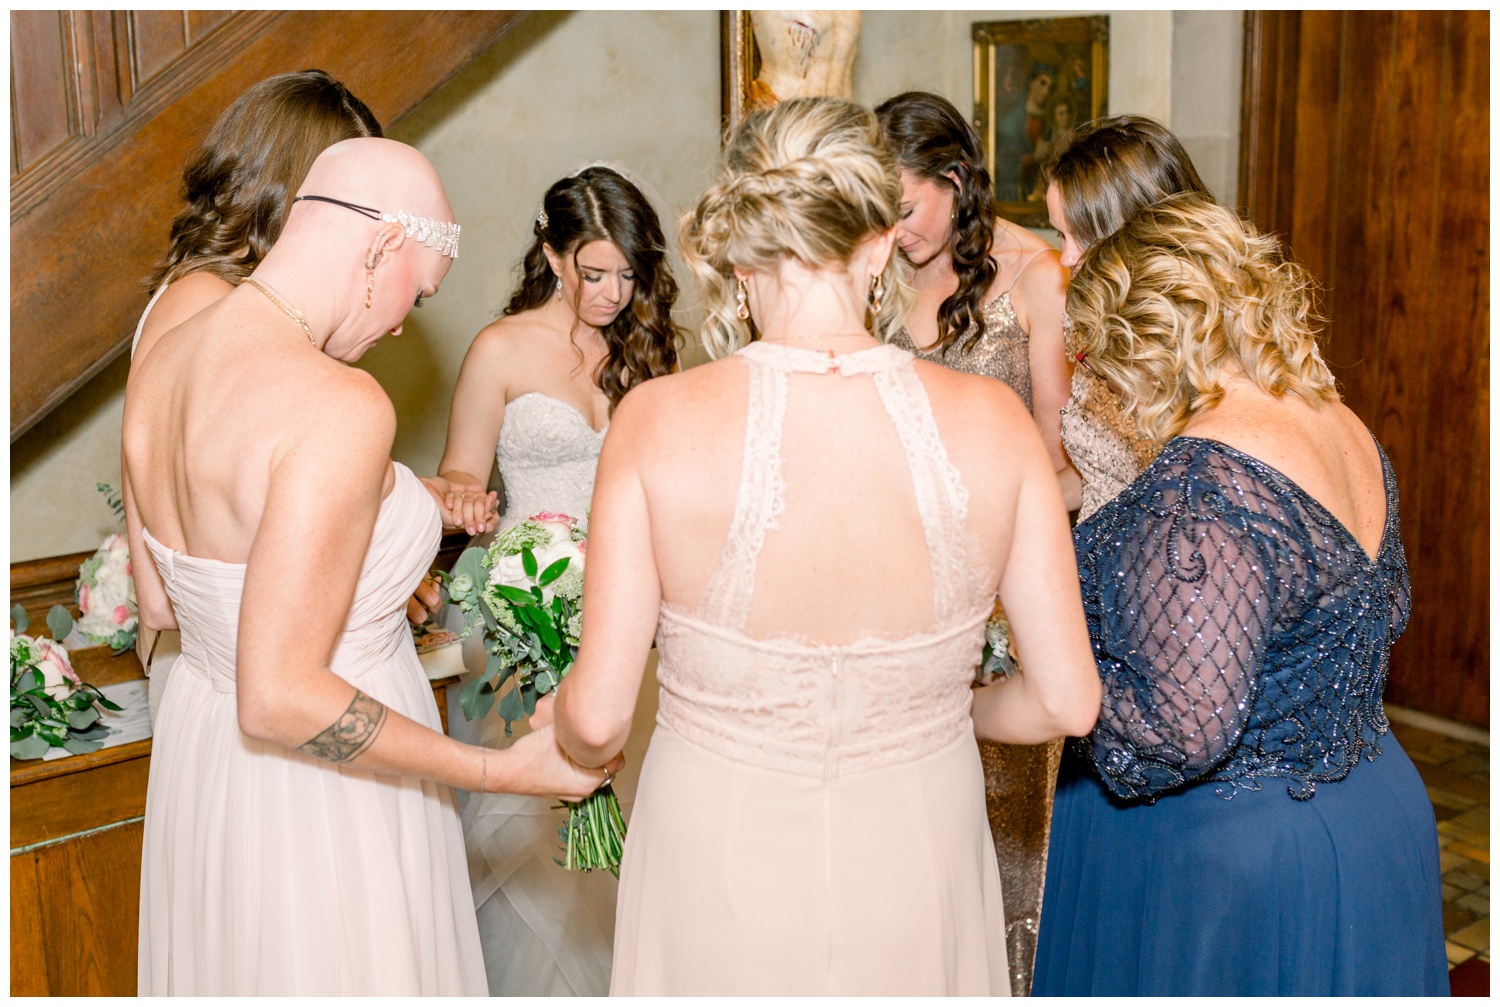 Praying over Bride on Wedding Day - Cincinnati Wedding Photographer